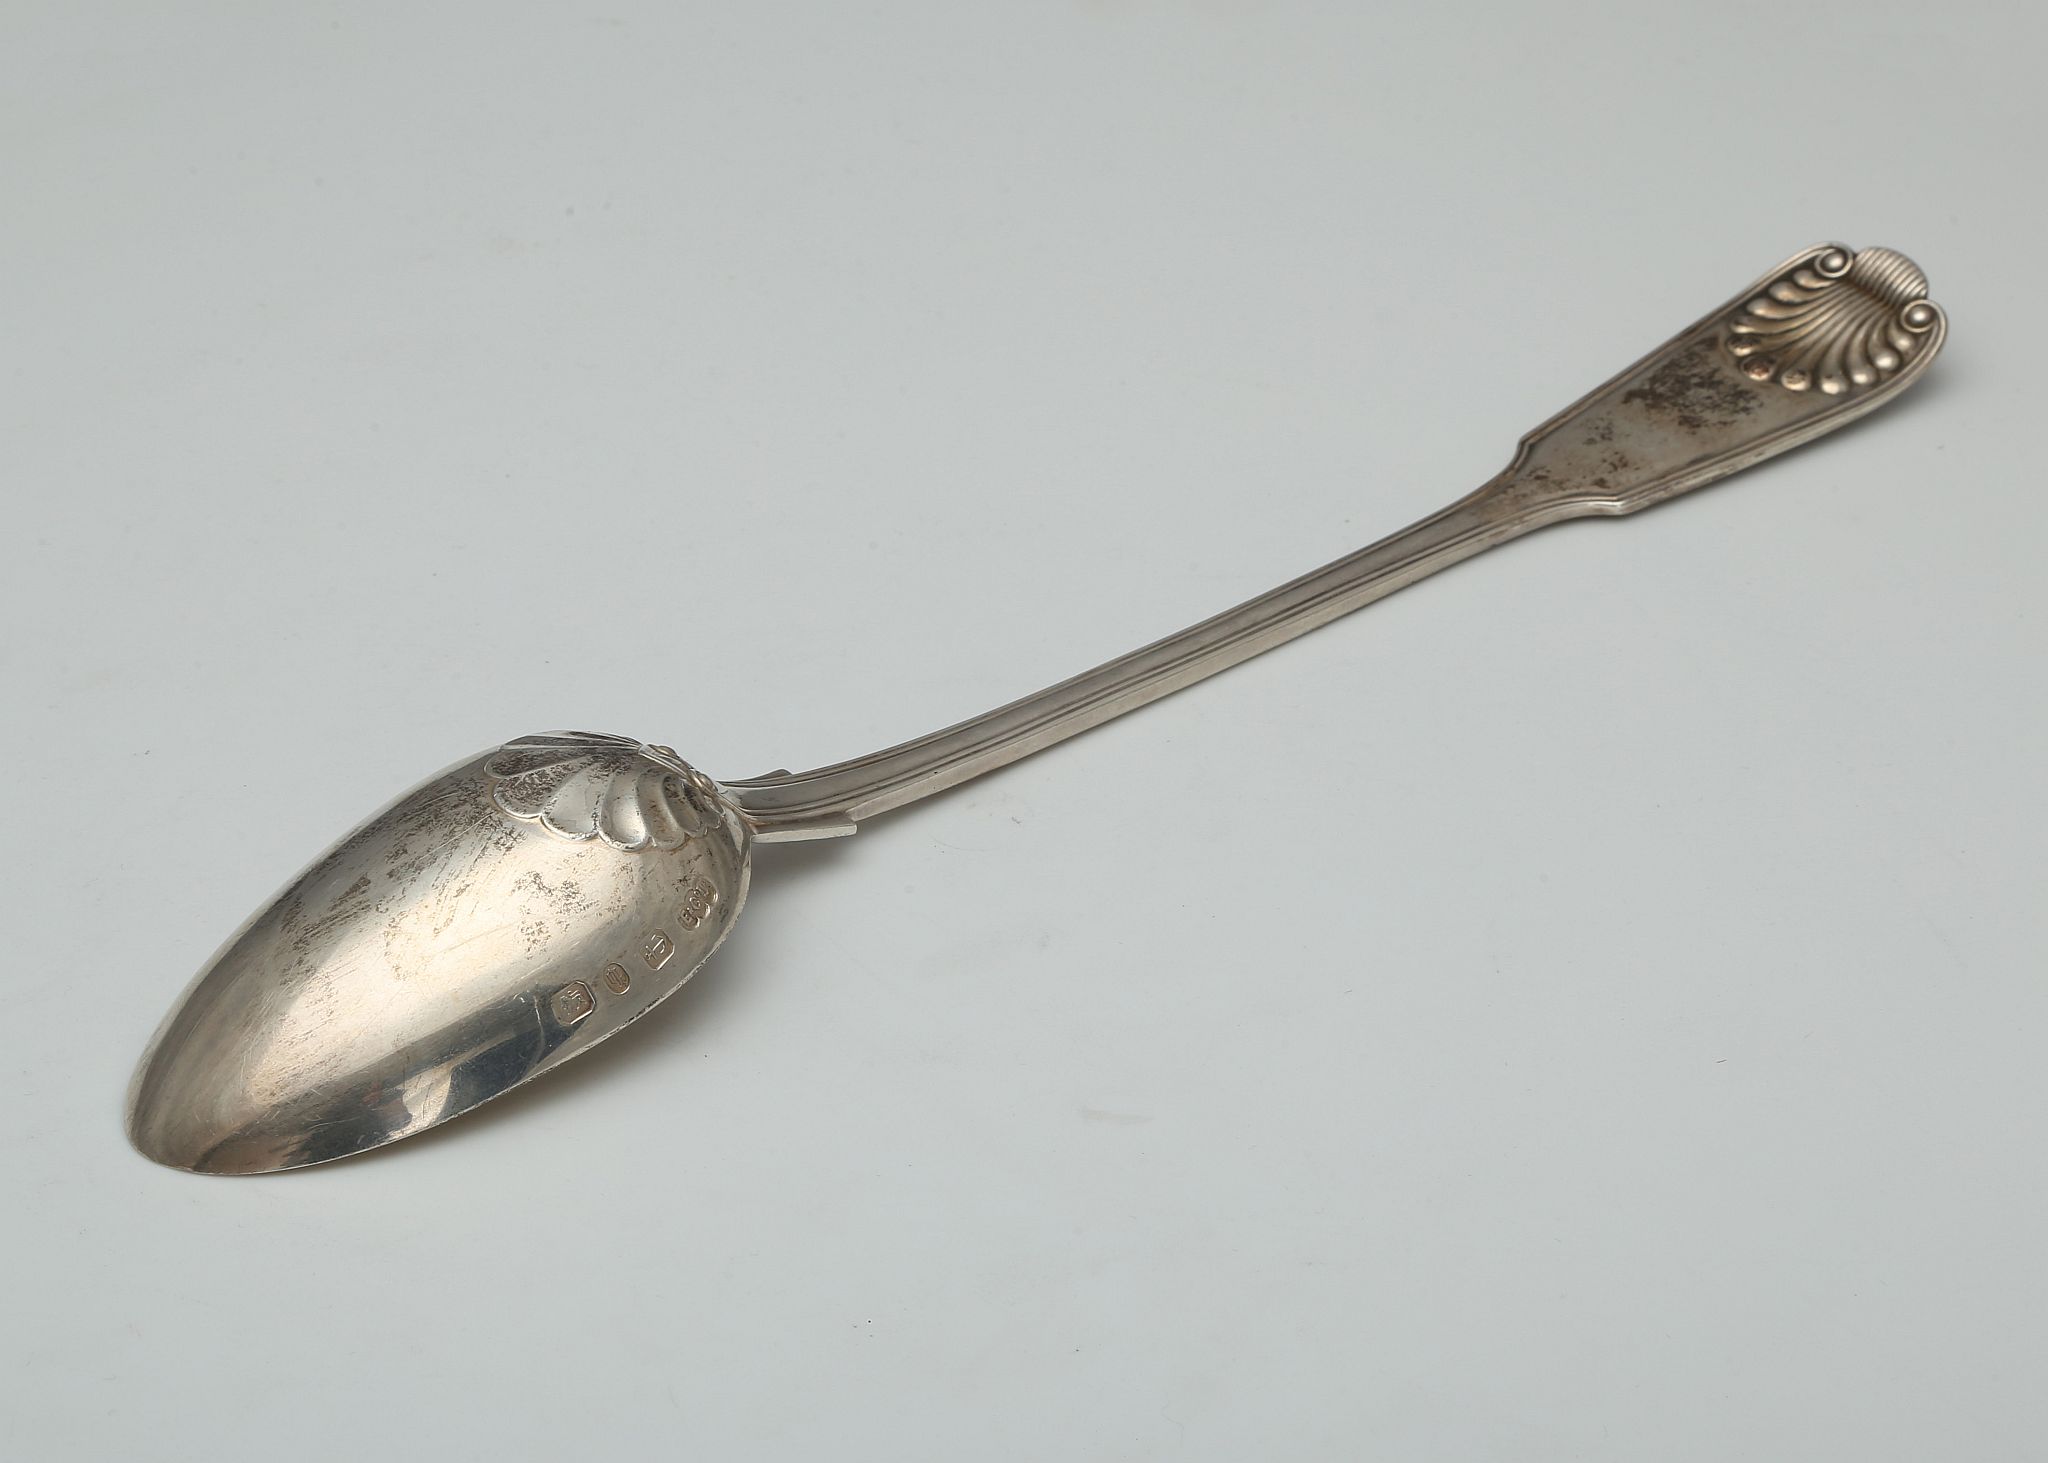 Antique Victorian Sterling Silver basting / stuffing spoon by Elkington & Co Ltd, Birmingham 1890. - Image 2 of 3